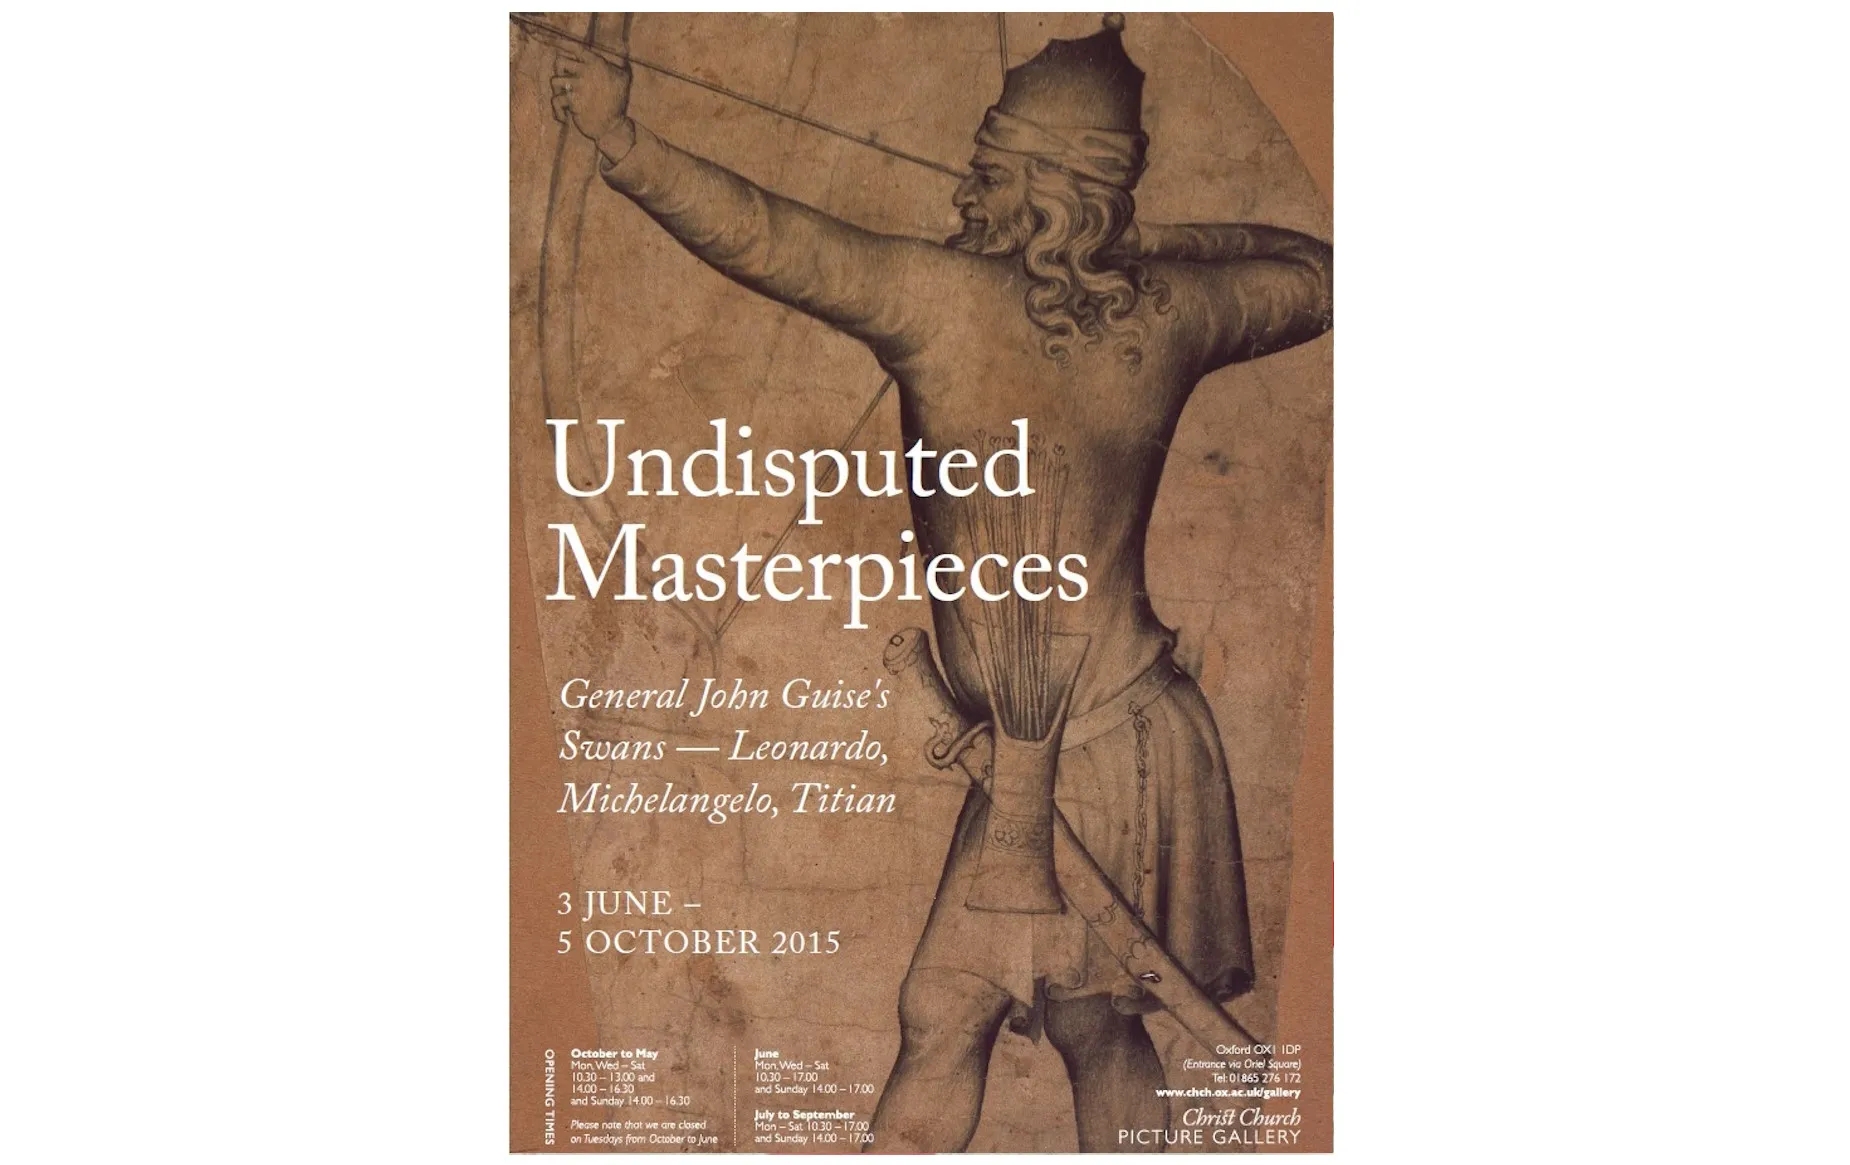 'Undisputed Masterpieces' exhibition poster